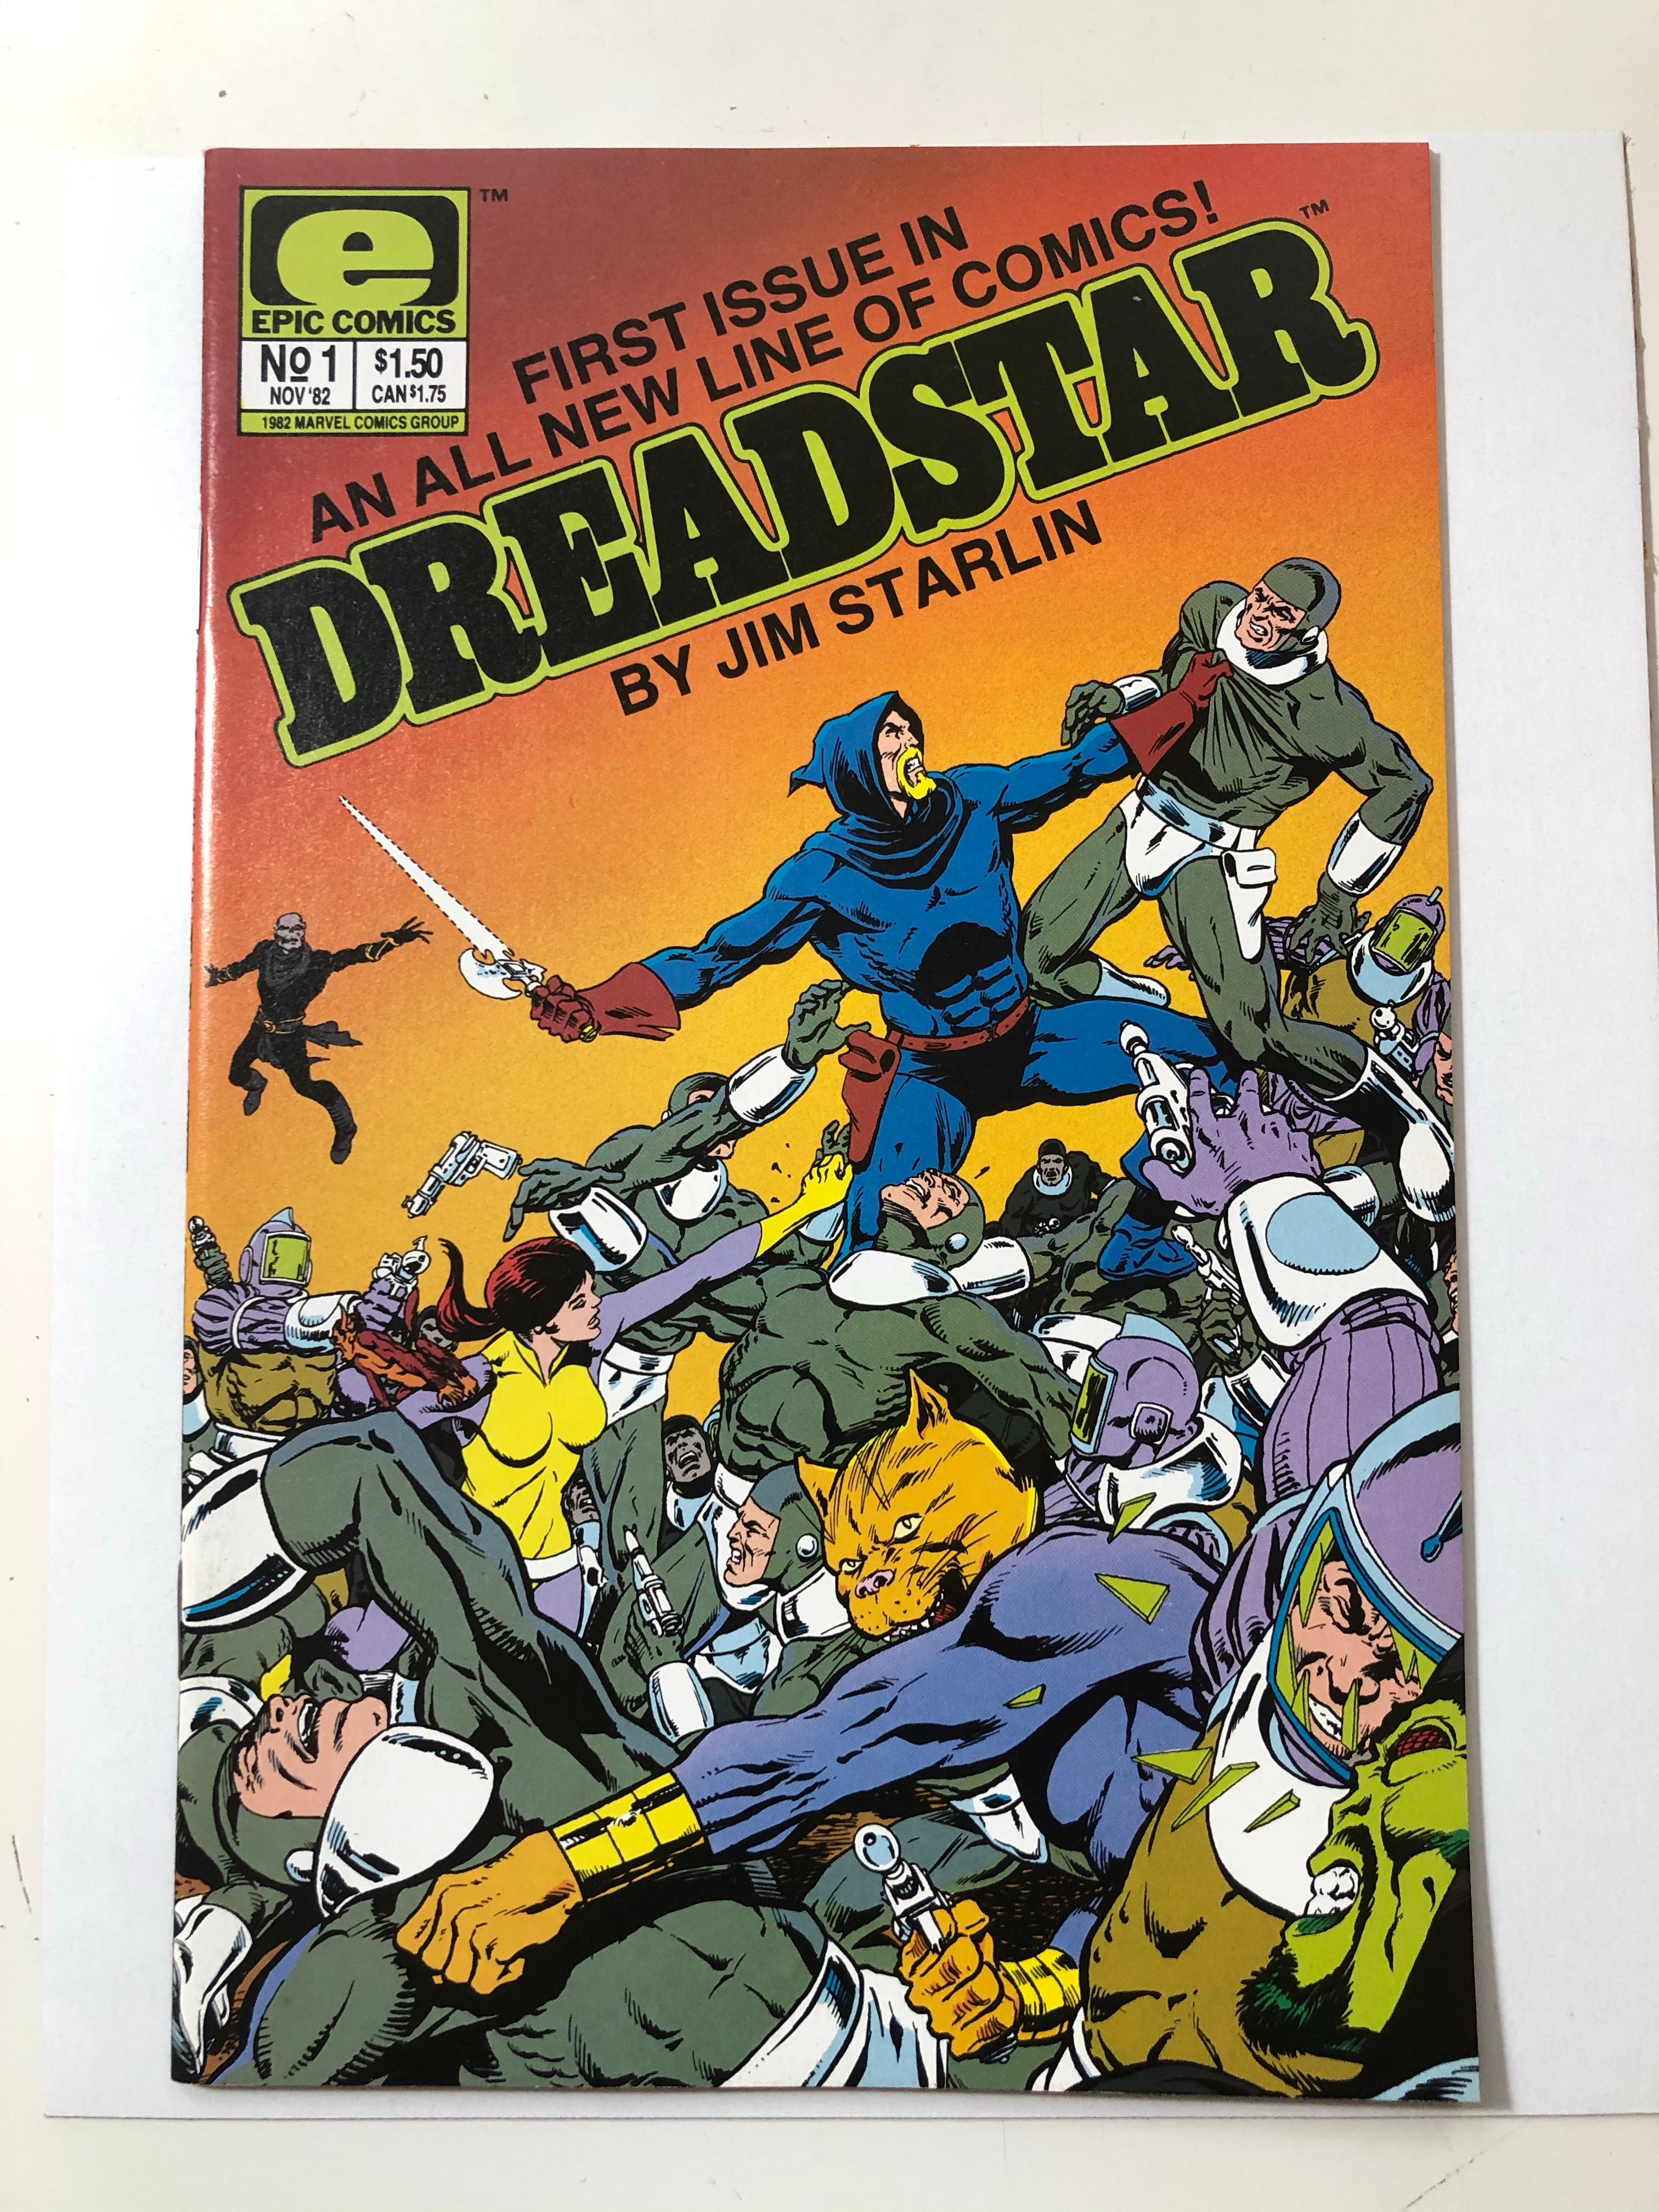 Dread Star #1 high grade comic book